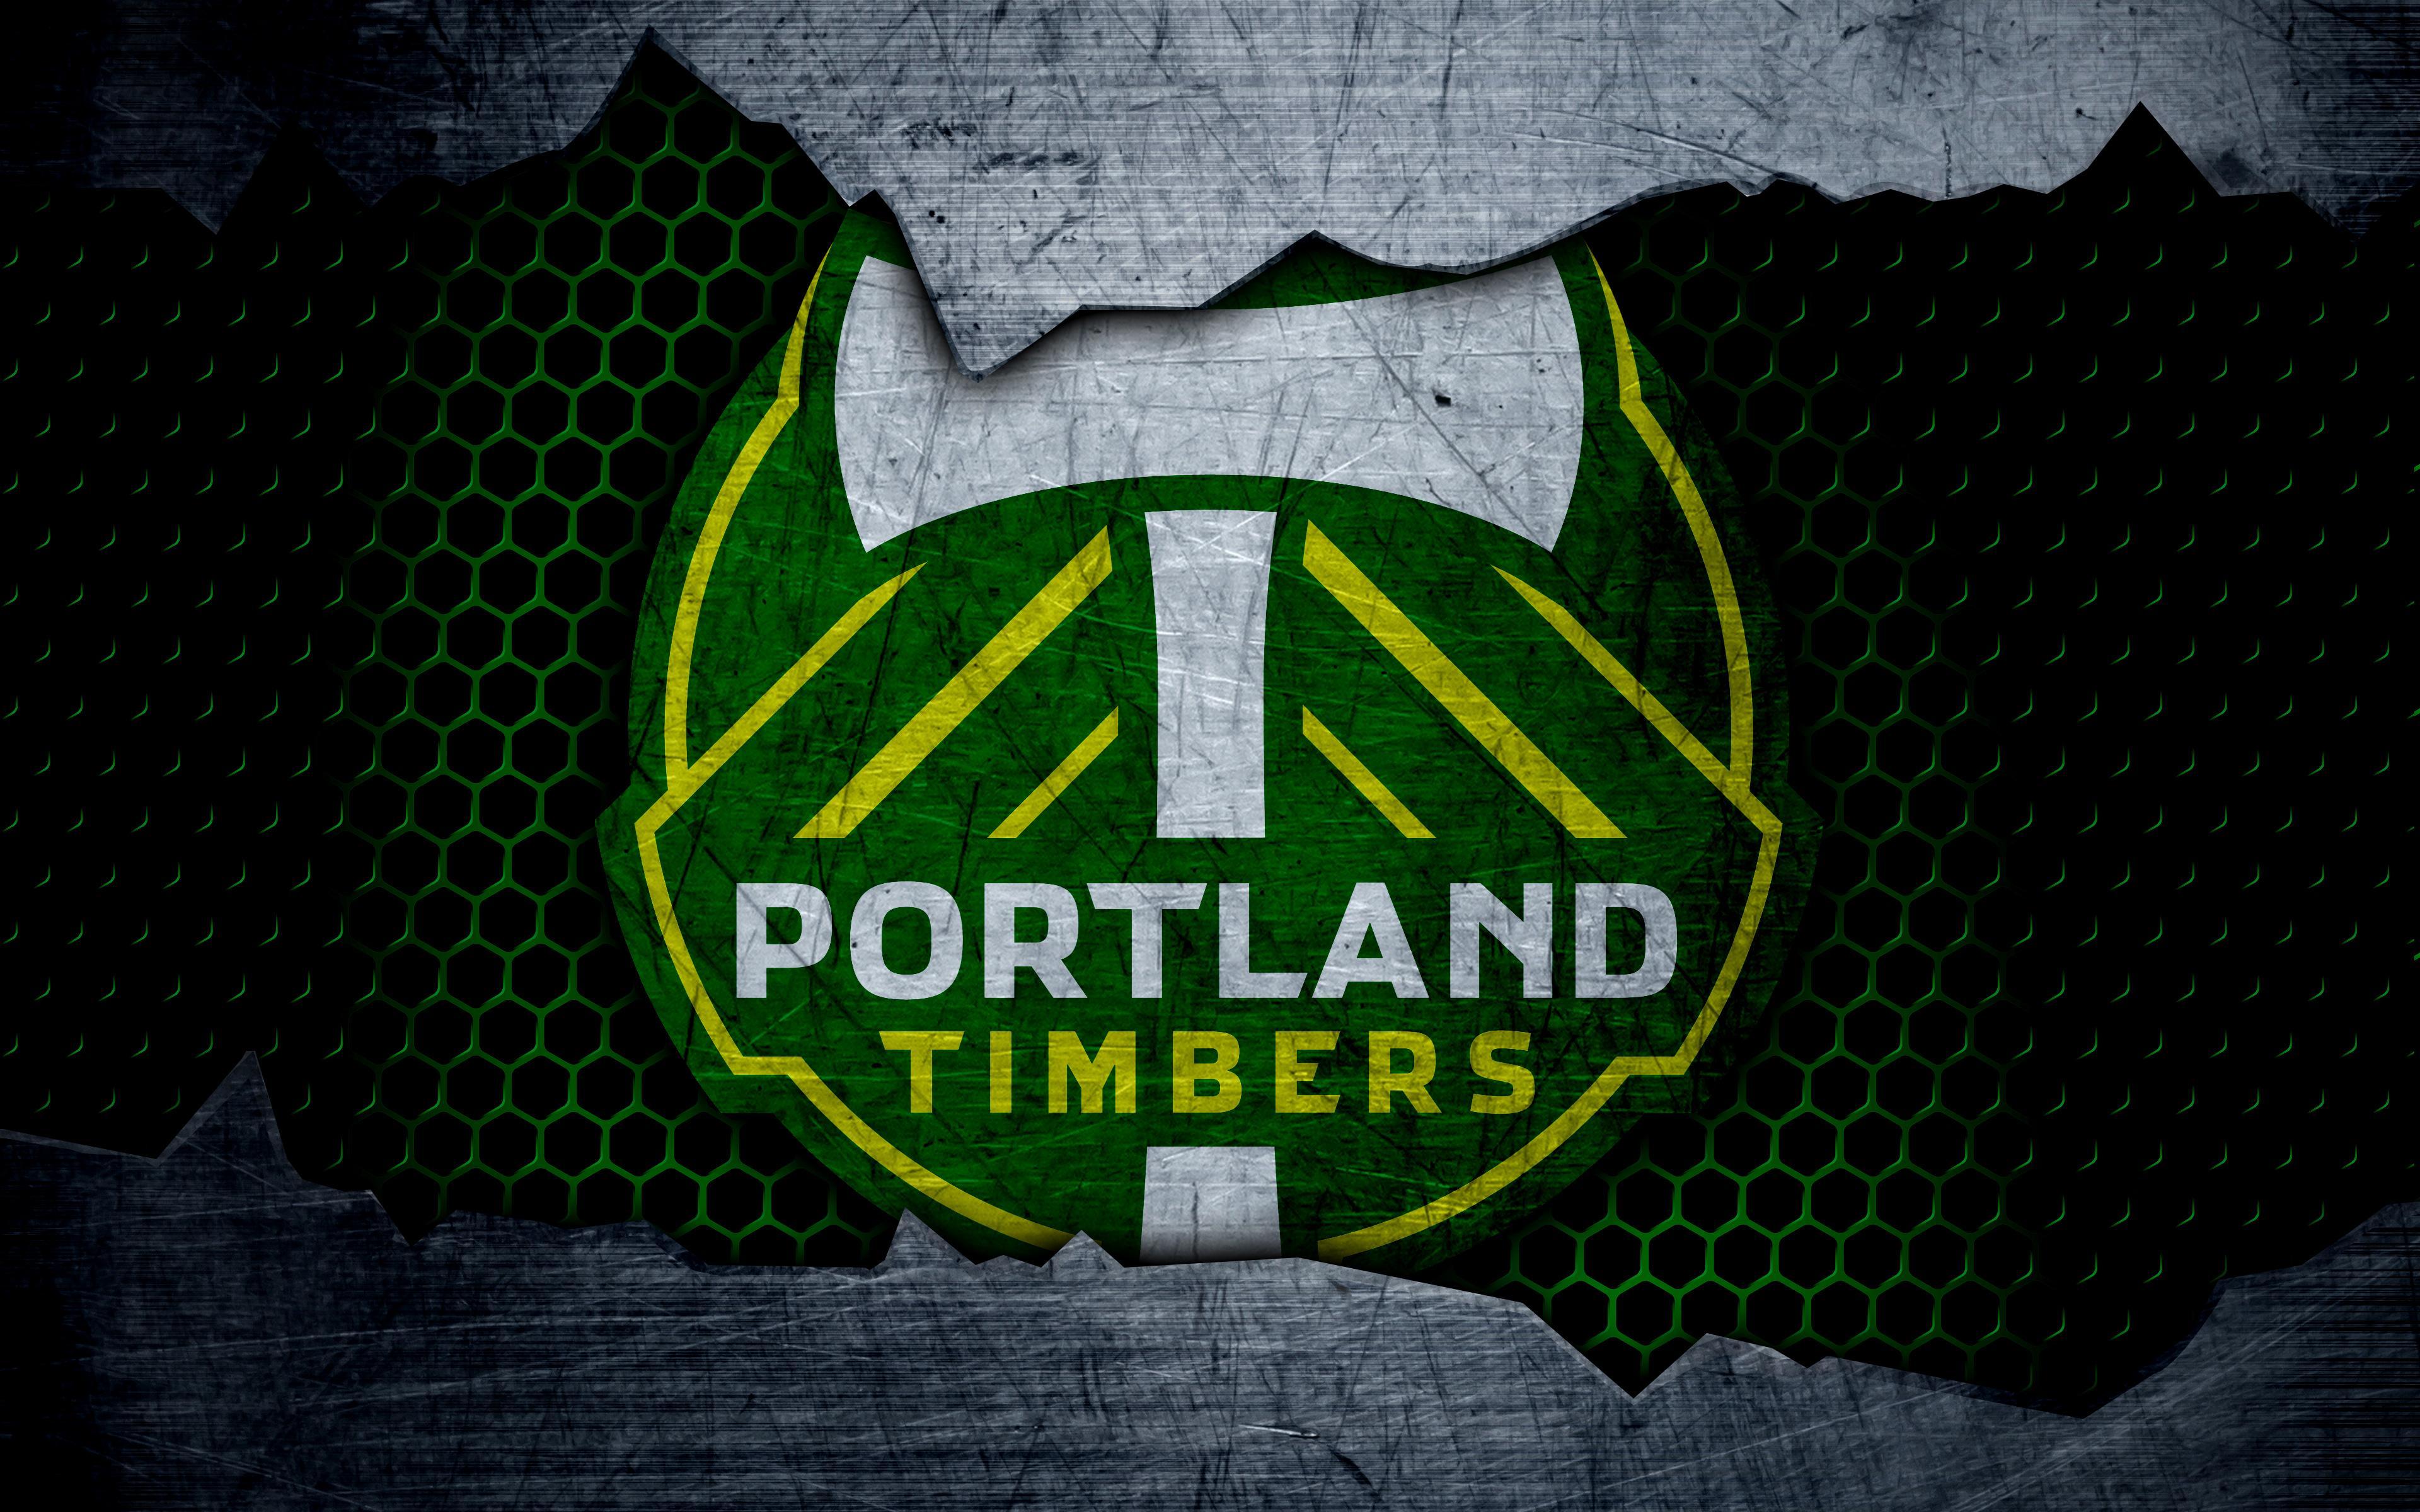 Portland Timbers 4k Ultra HD Wallpaper. Background Image